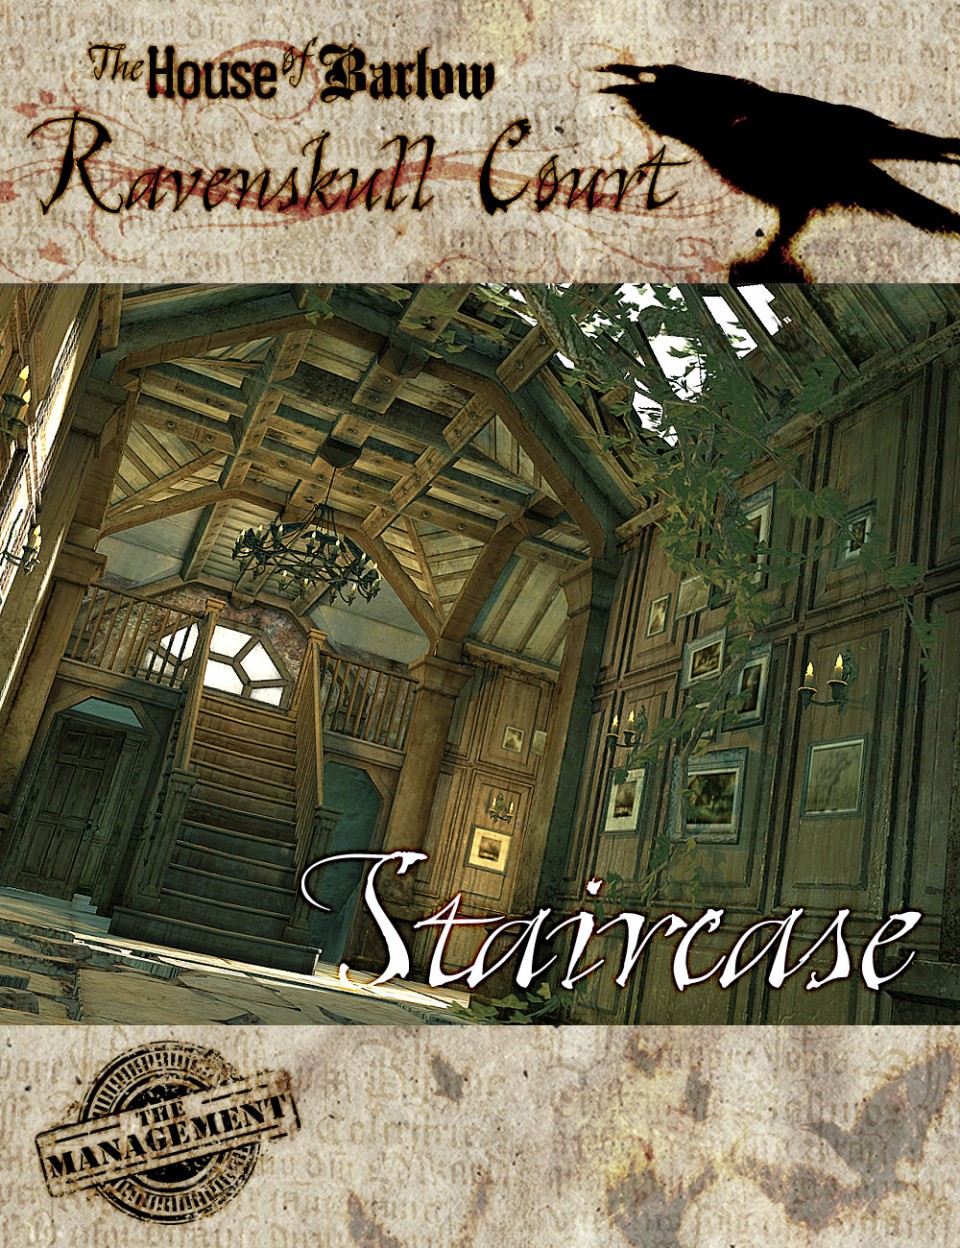 The Barlow House Ravenskull Stair Hall